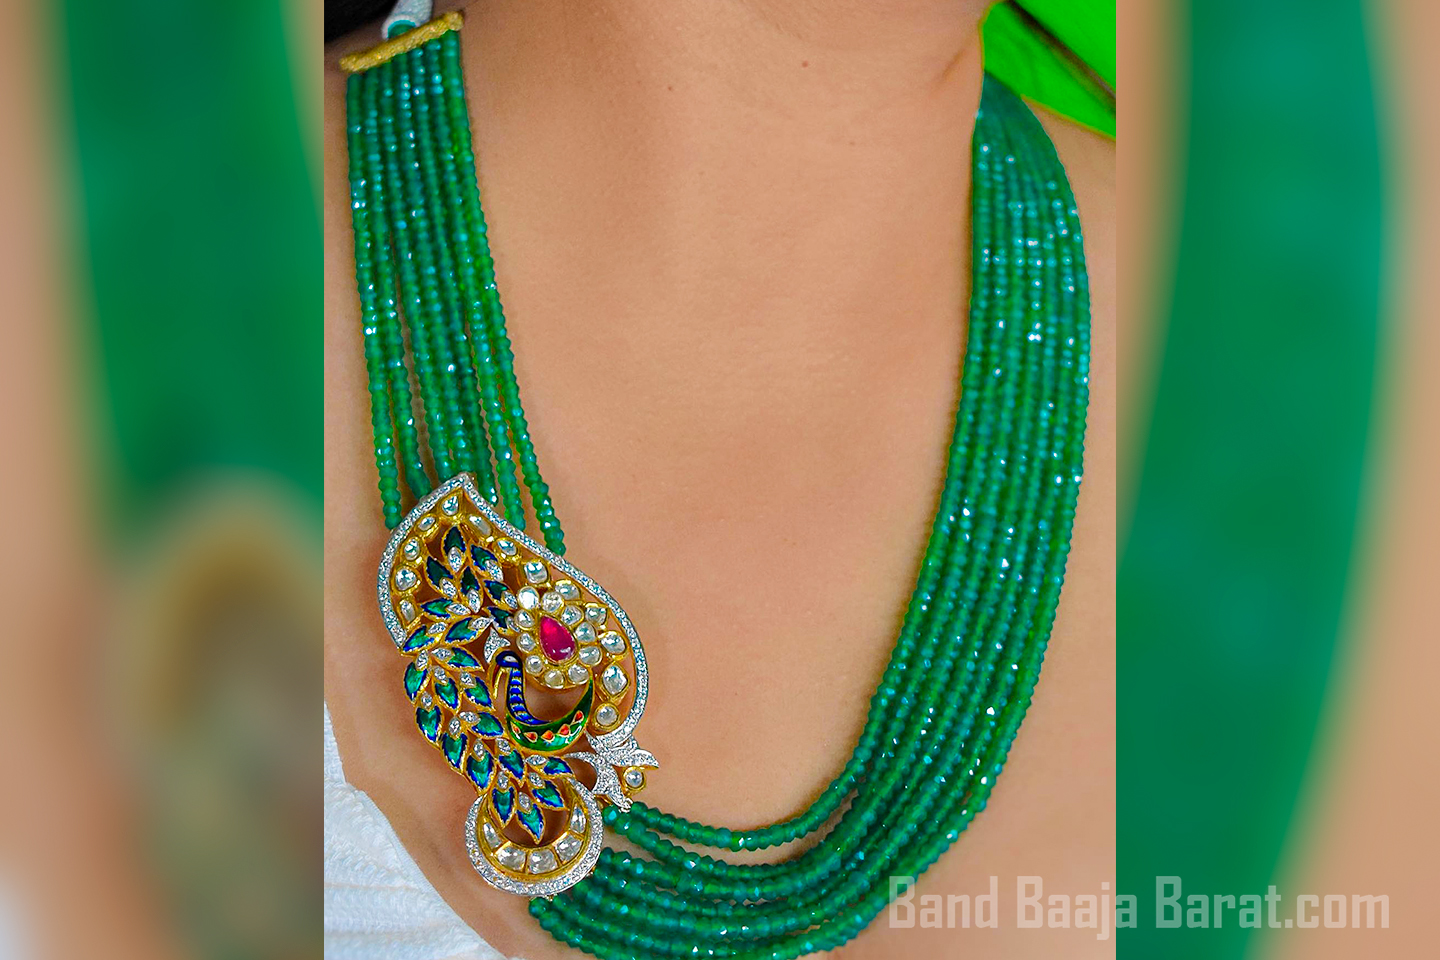 jewels by preeti vasant vihar delhi